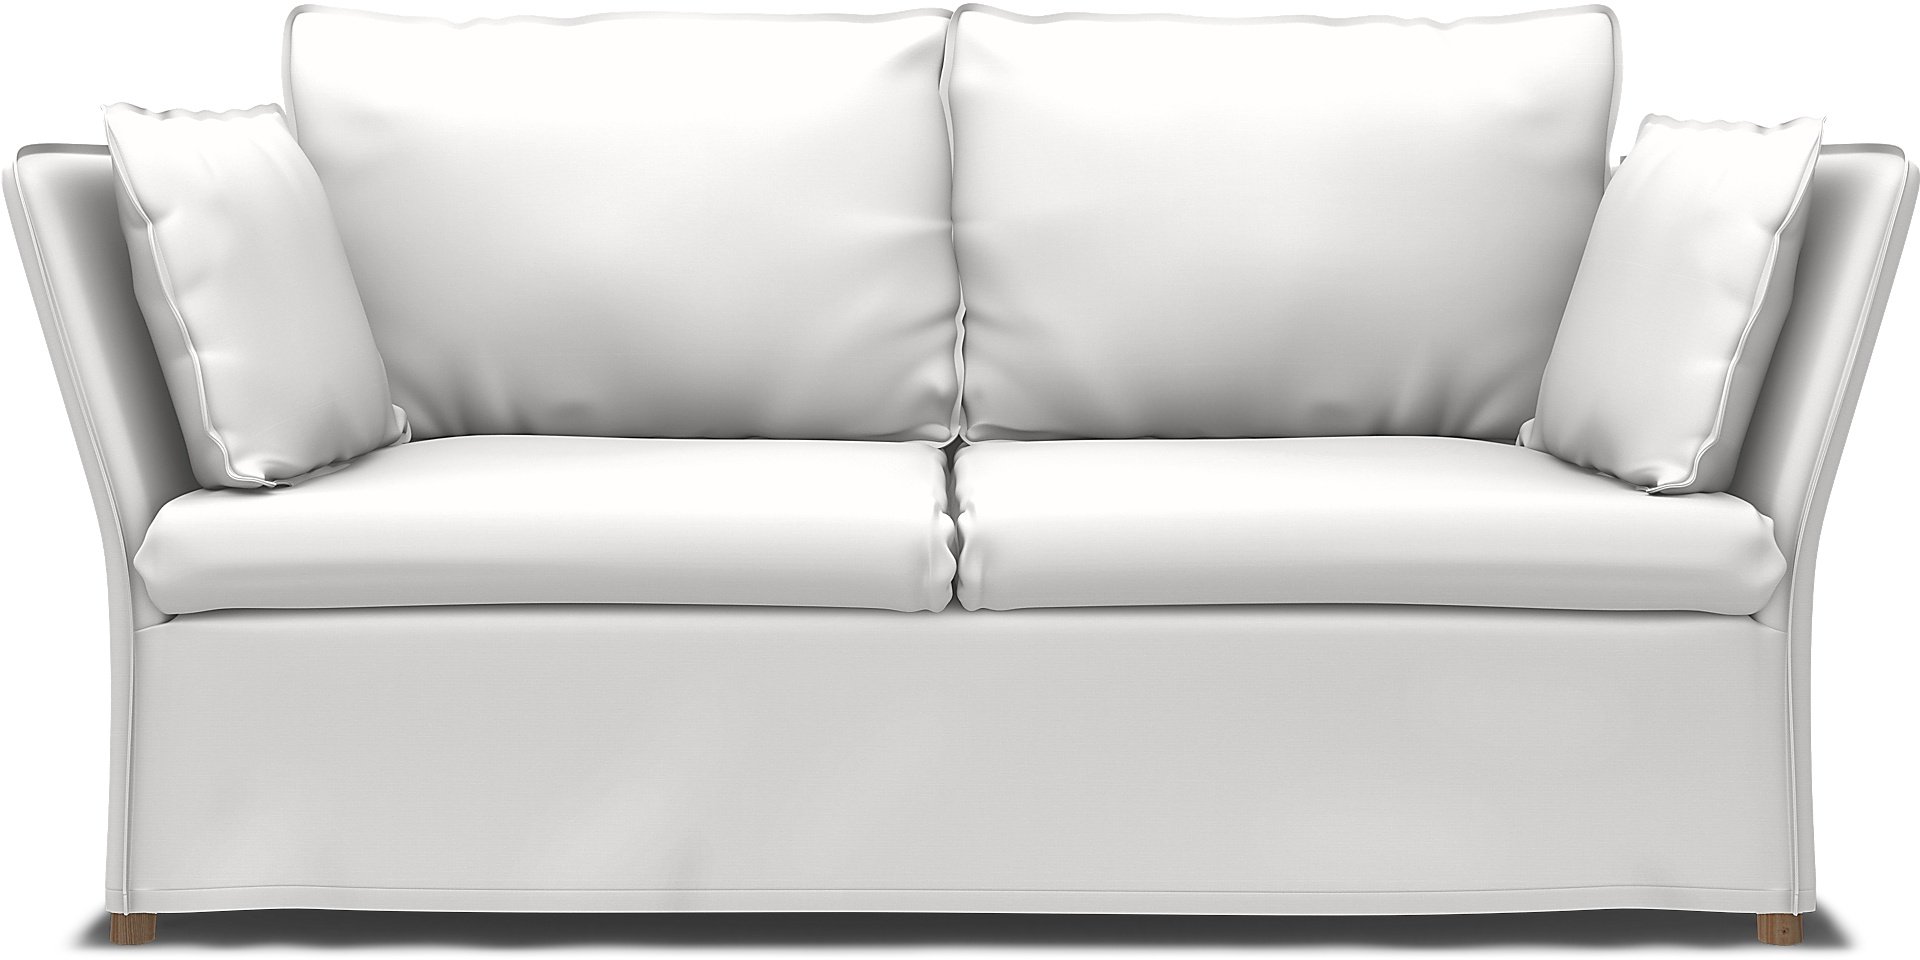 IKEA - Backsalen 2 seater sofa, Absolute White, Cotton - Bemz